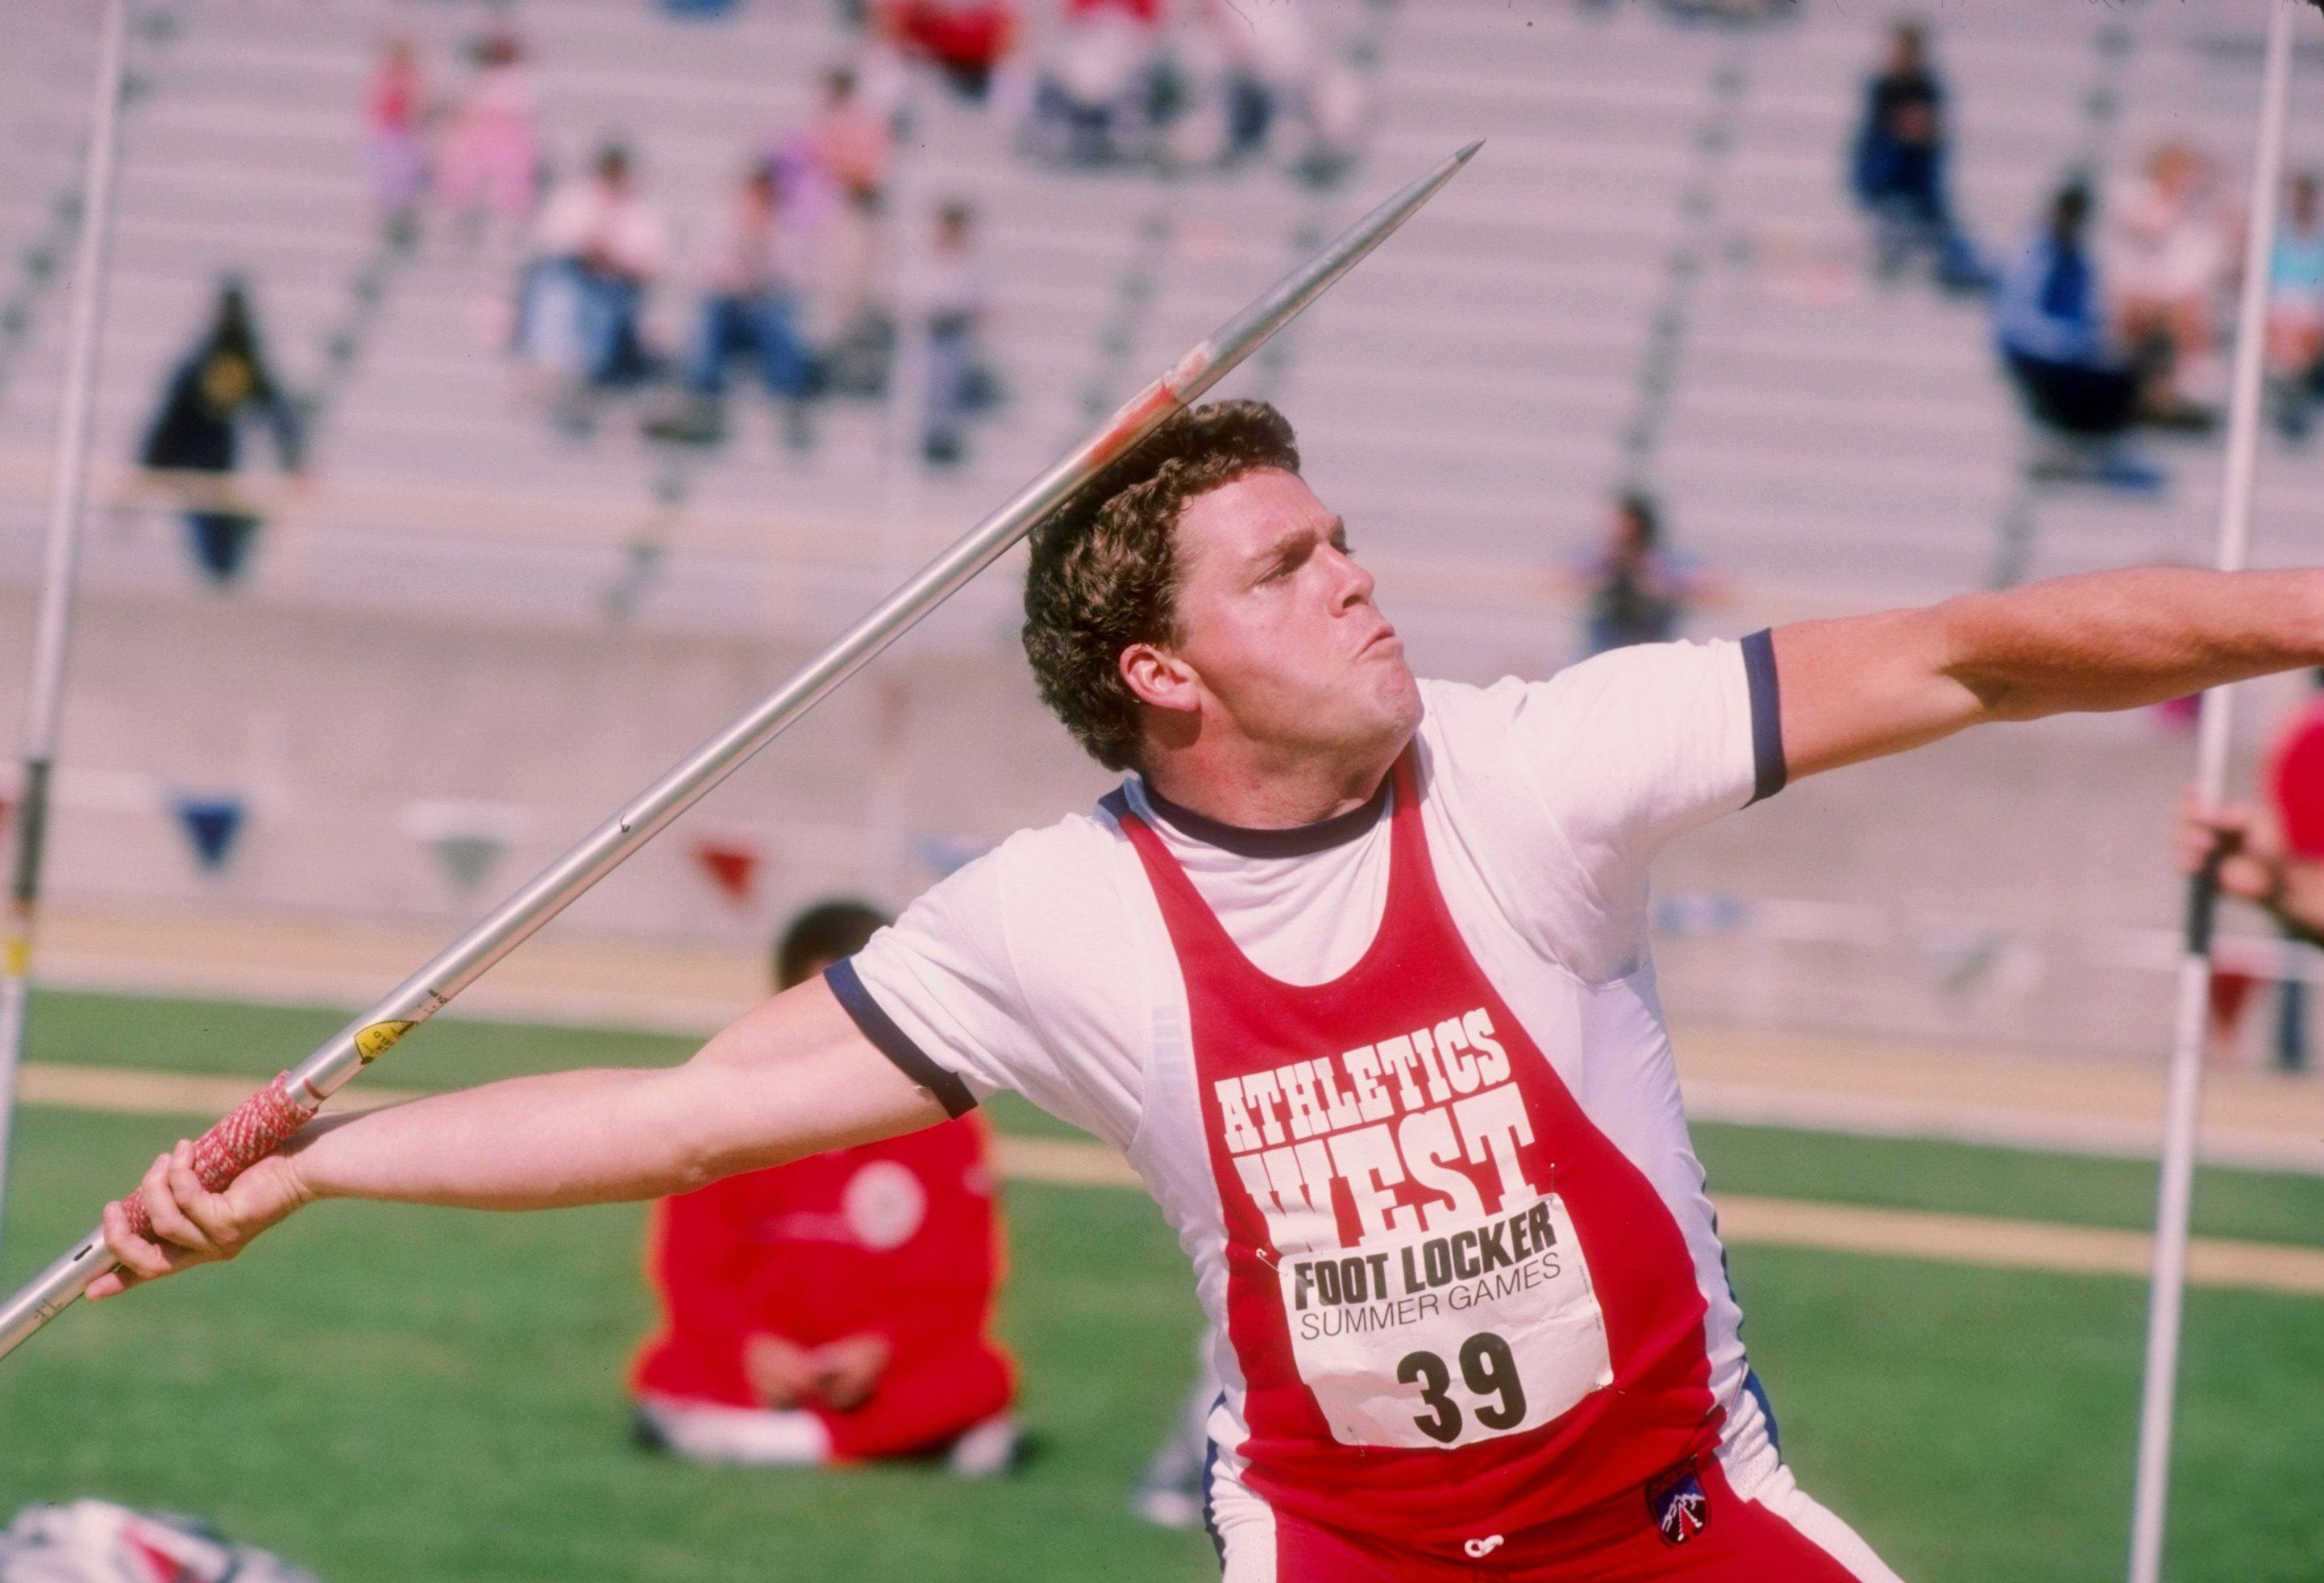 US javelin thrower Tom Petranoff